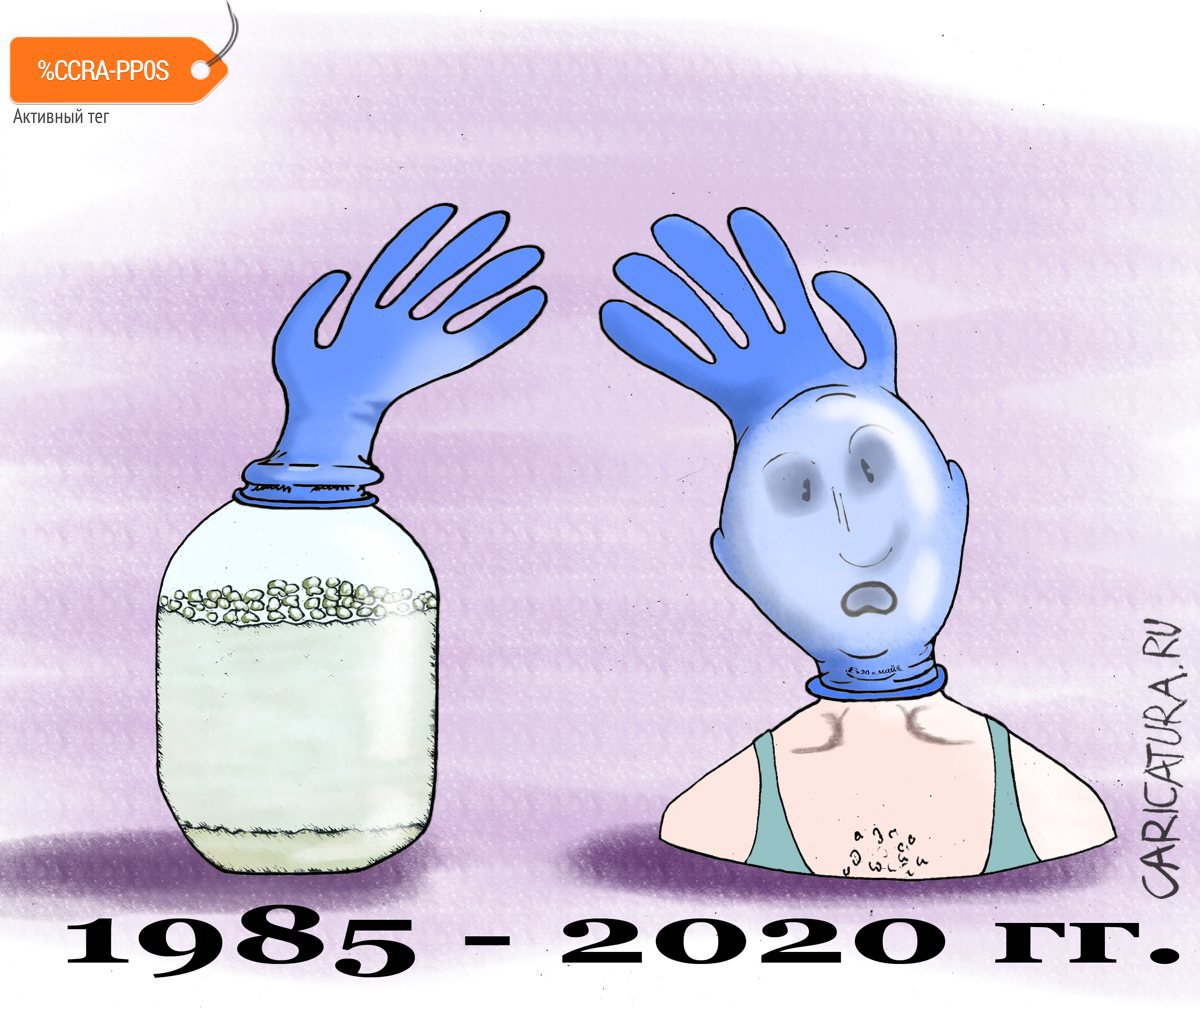 Карикатура "Привет из прошлого", Борис Демин